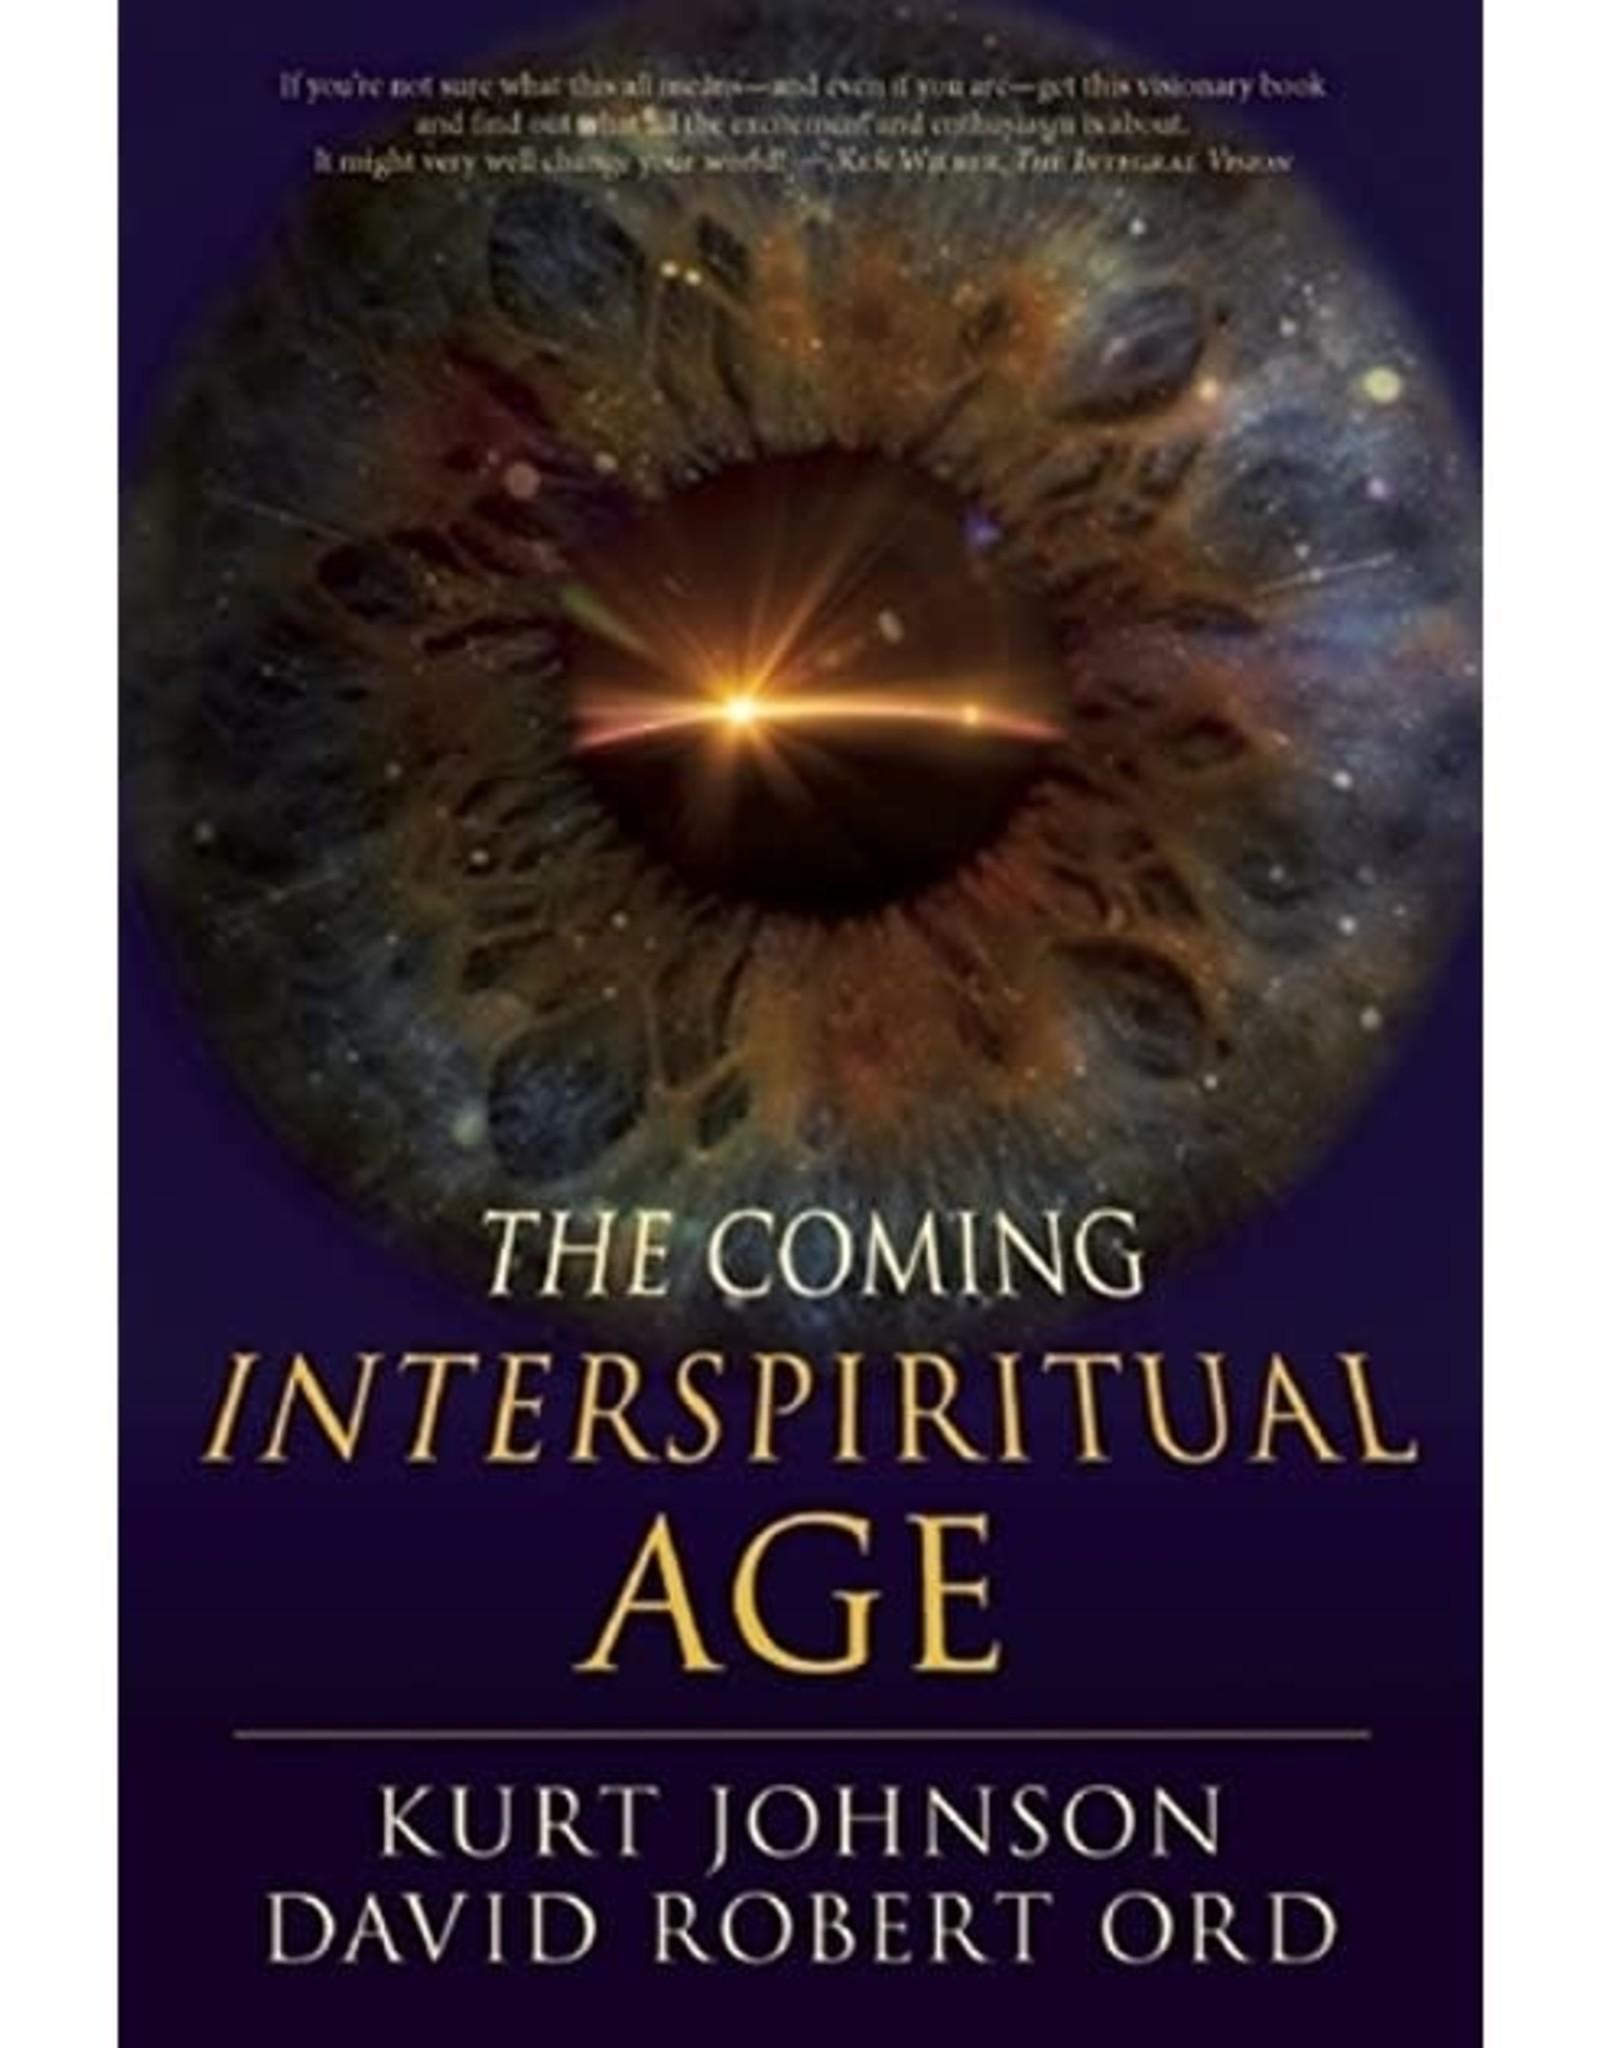 Kurt Johnson Coming Interspiritual Age by Kurt Johnson & David Robert Ord